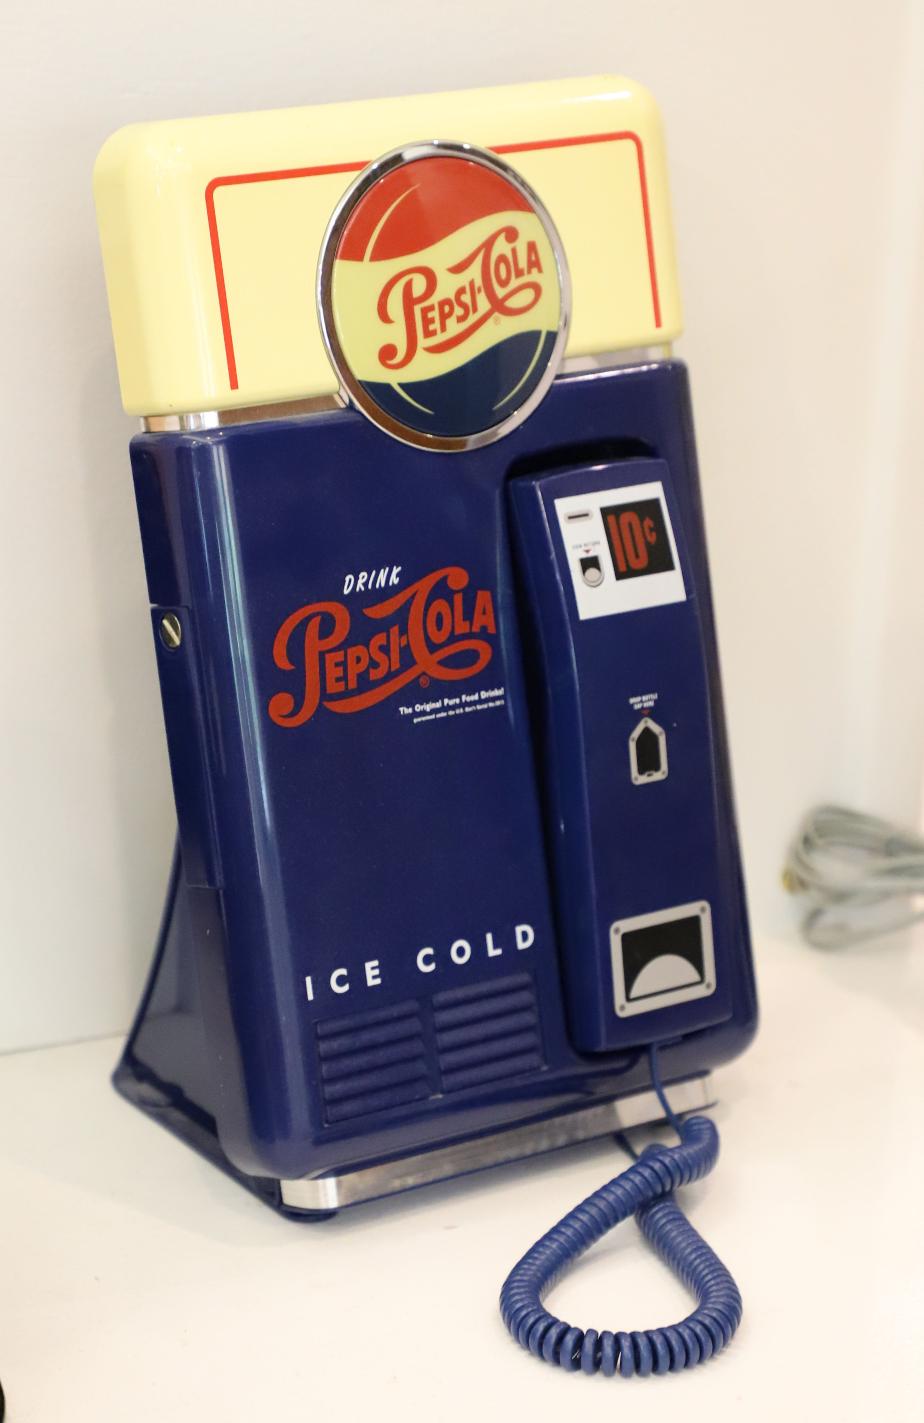 NH Telephone Museum - Pepsi Cola